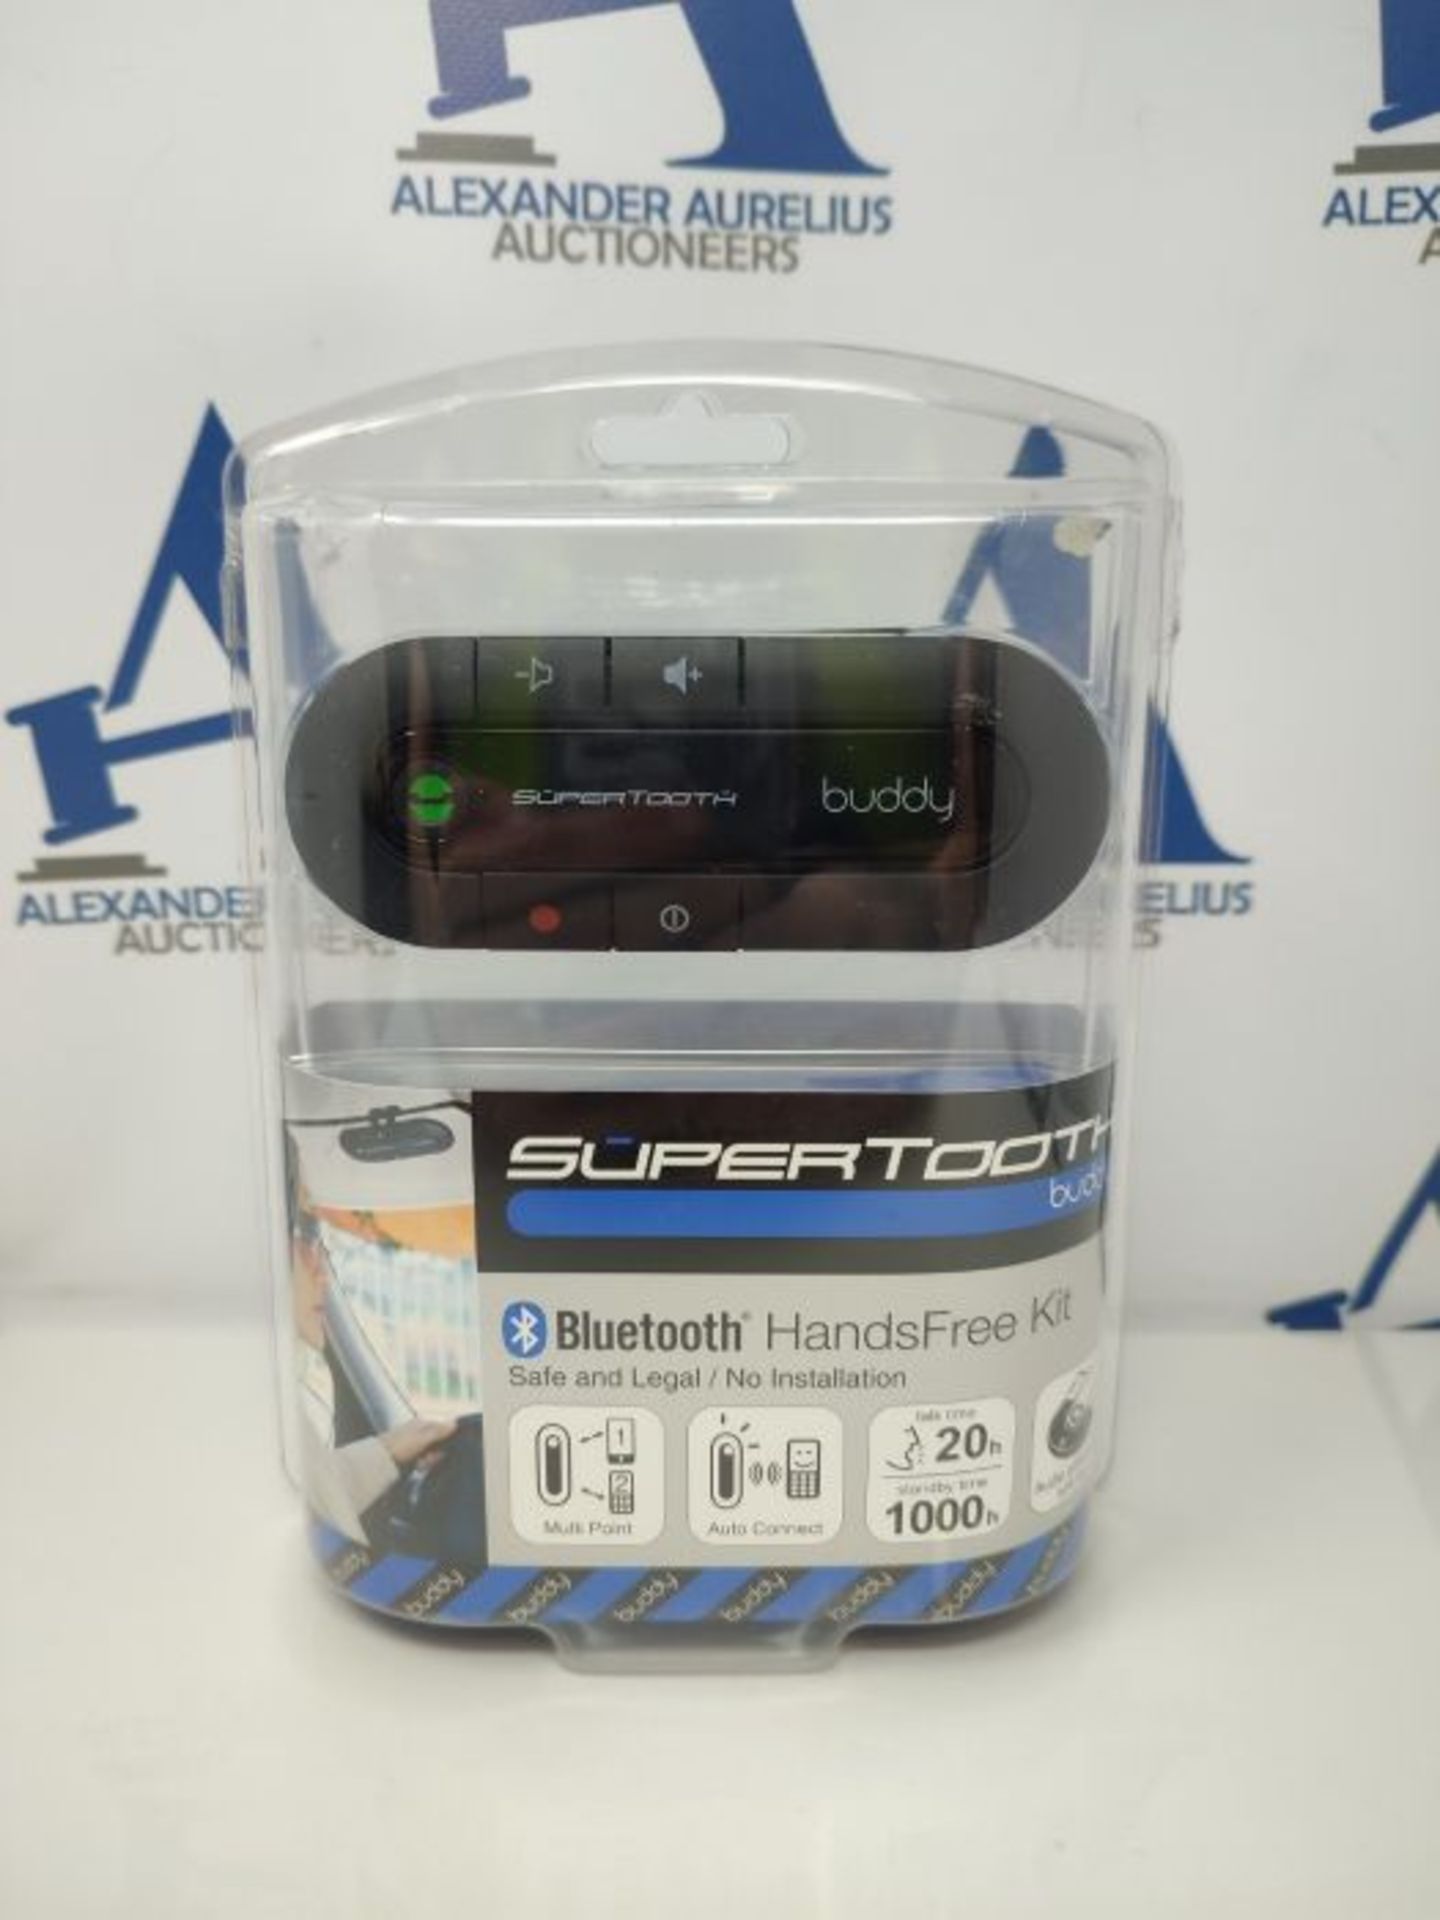 SuperTooth Kit-voiture mains libres Bluetooth pour pare-soleil Buddy - Noir - Image 2 of 3